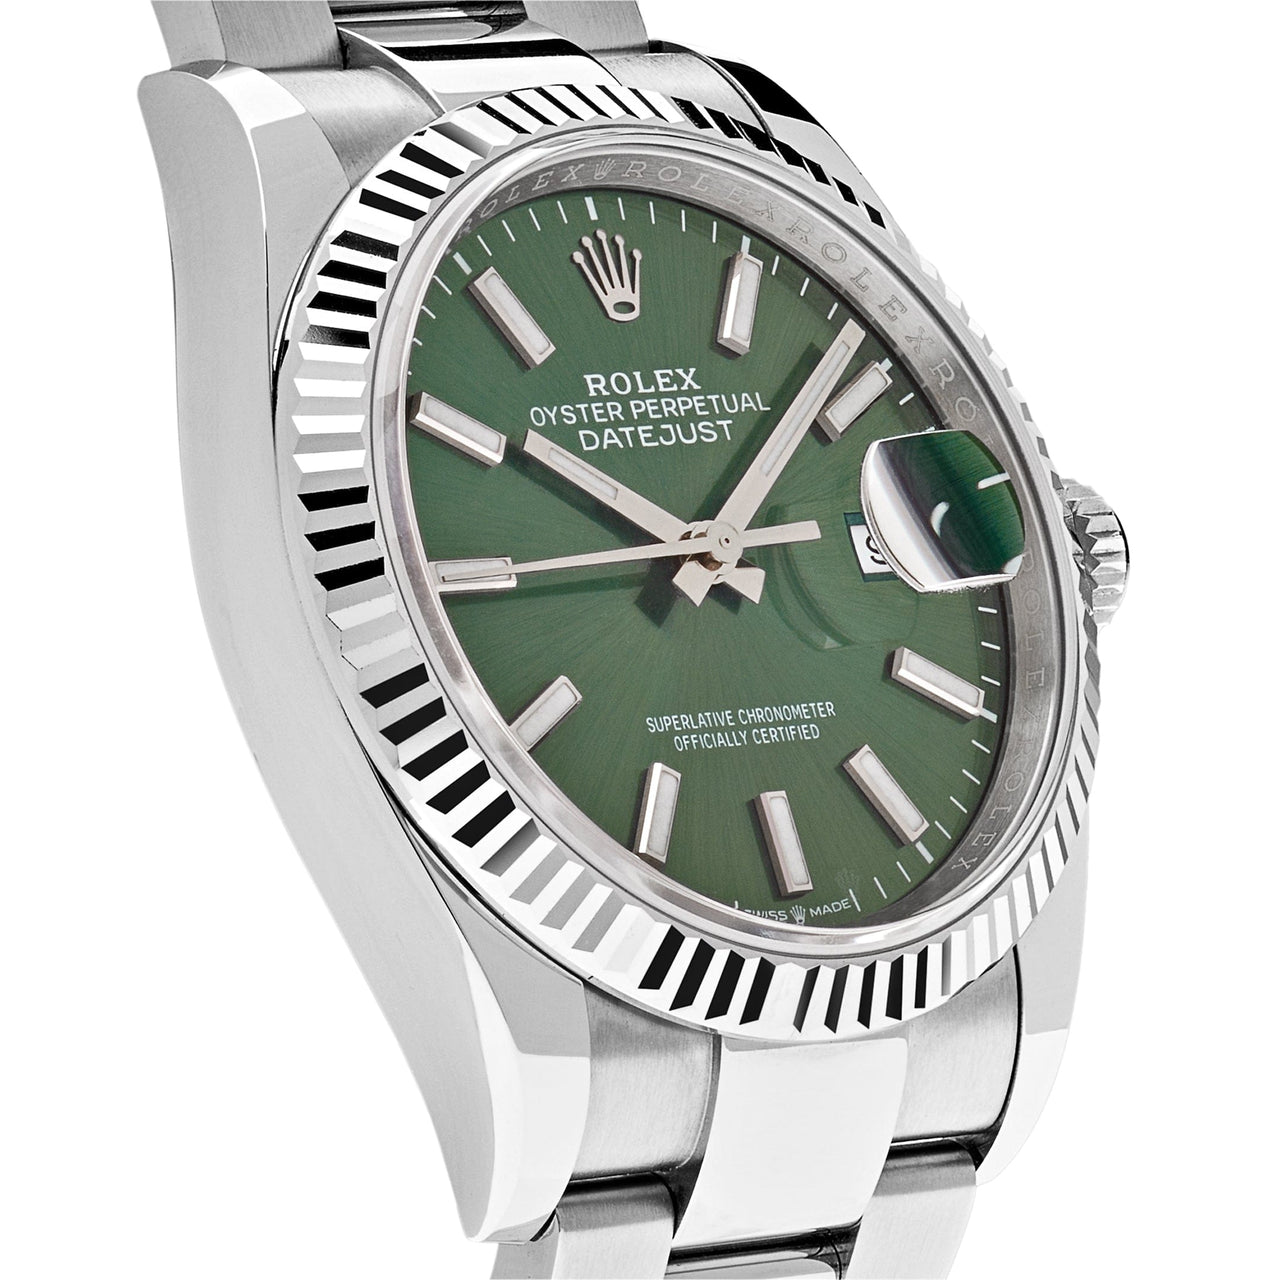 Luxury Watch Rolex Datejust 36mm White Gold & Stainless Steel Mint Green Dial 126234 Wrist Aficionado